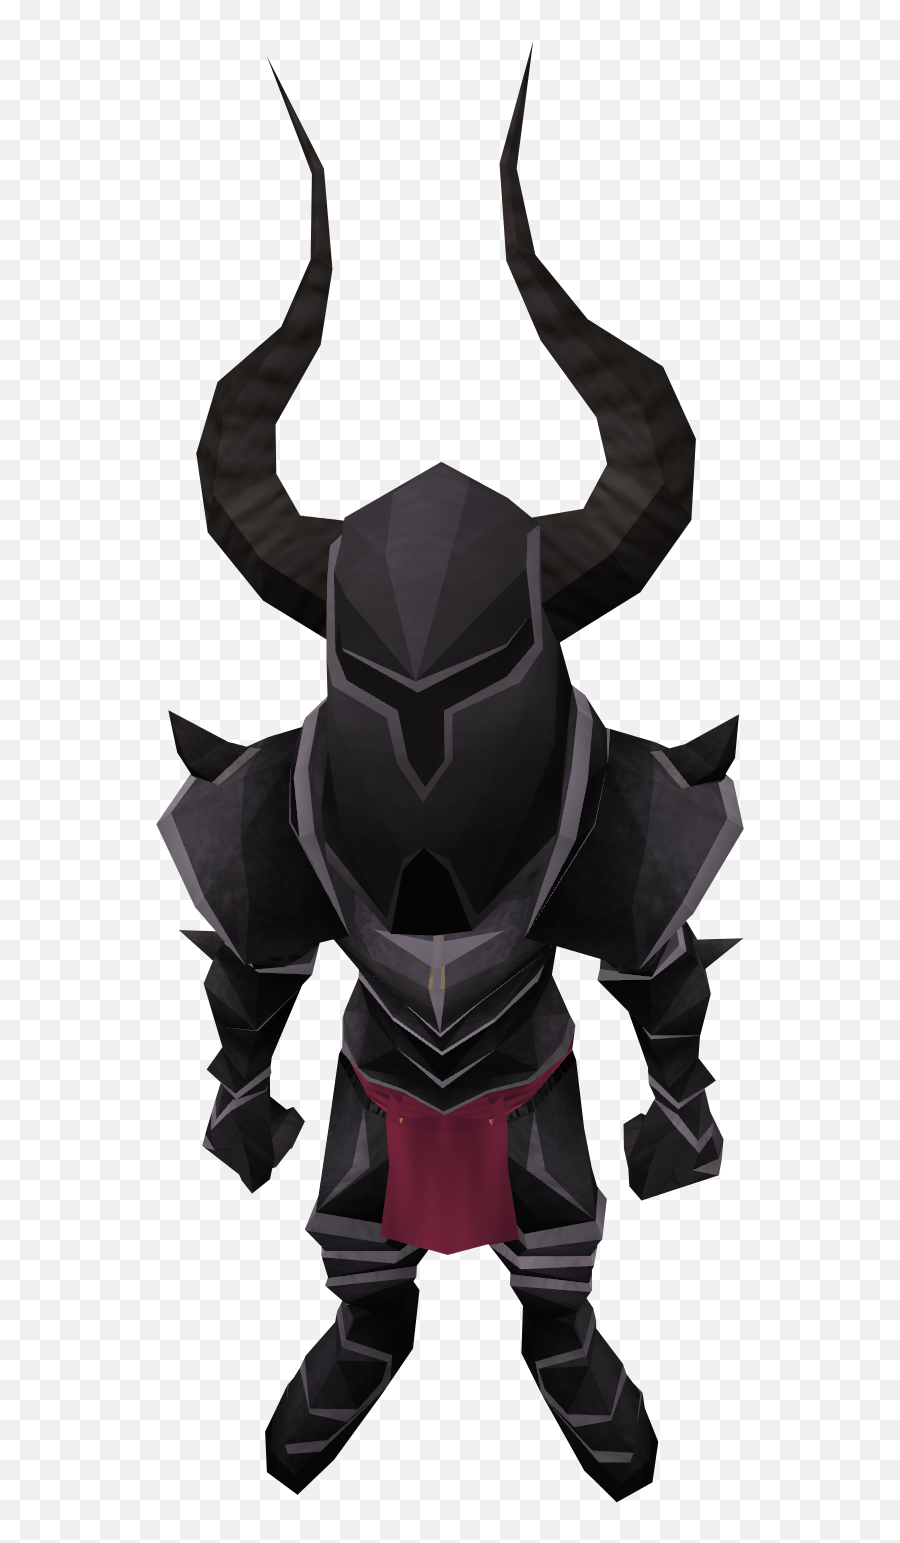 Tiny Black Knight - Mask Png,Black Knight Png